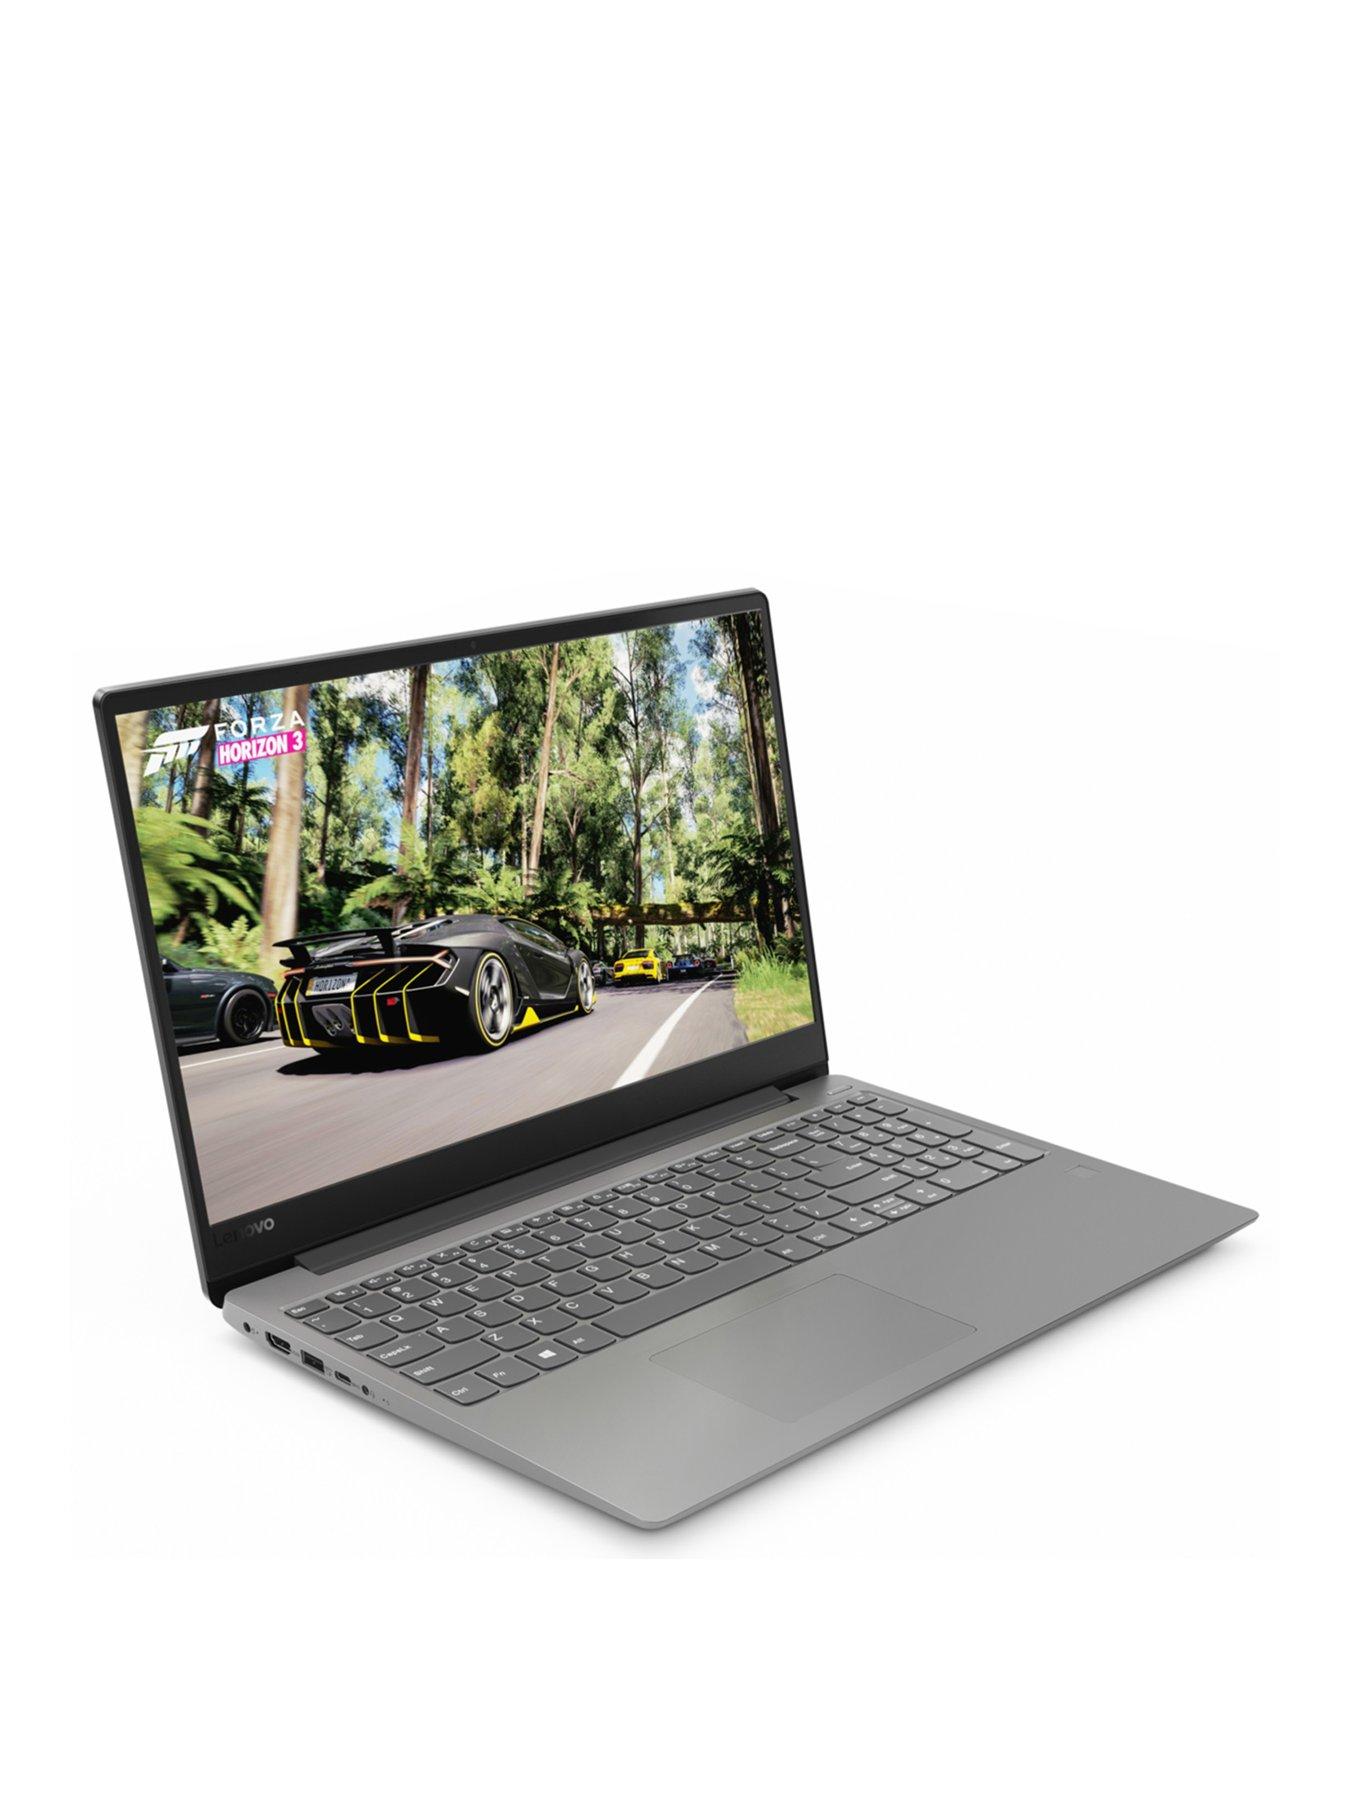 Lenovo Ideapad 330S-15Ikb Intel Core I7, 4Gb Ram, 1Tb Hard Drive, Full Hd 15.6 Inch Laptop – Laptop With Microsoft Office 365 Home